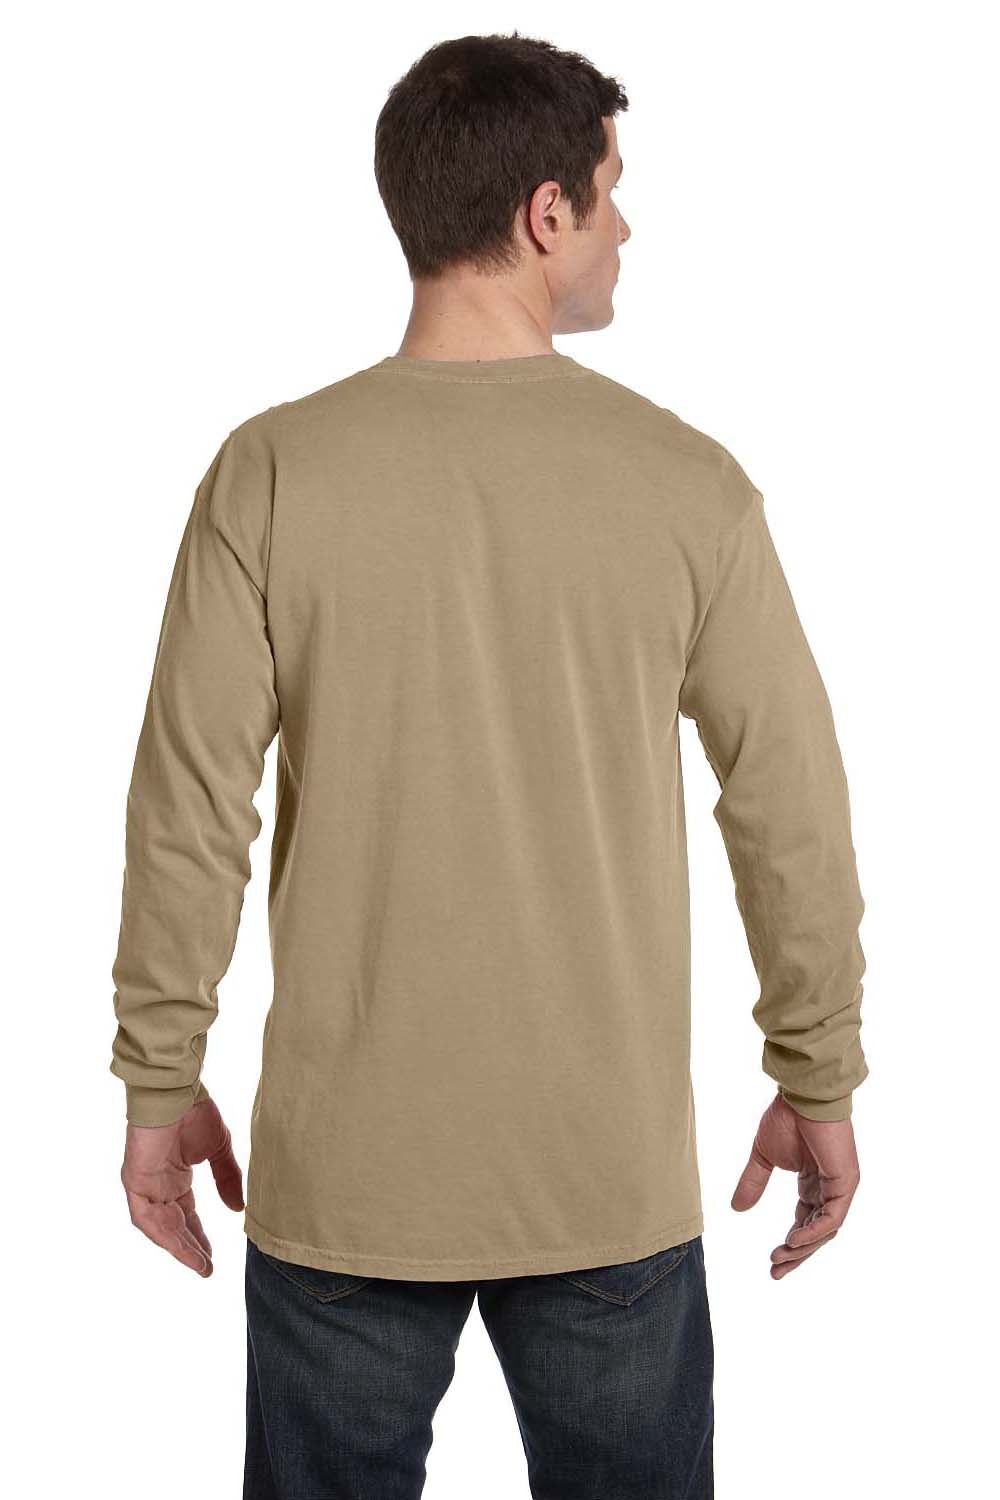 Comfort Colors C6014 Mens Long Sleeve Crewneck T-Shirt Khaki Brown Back